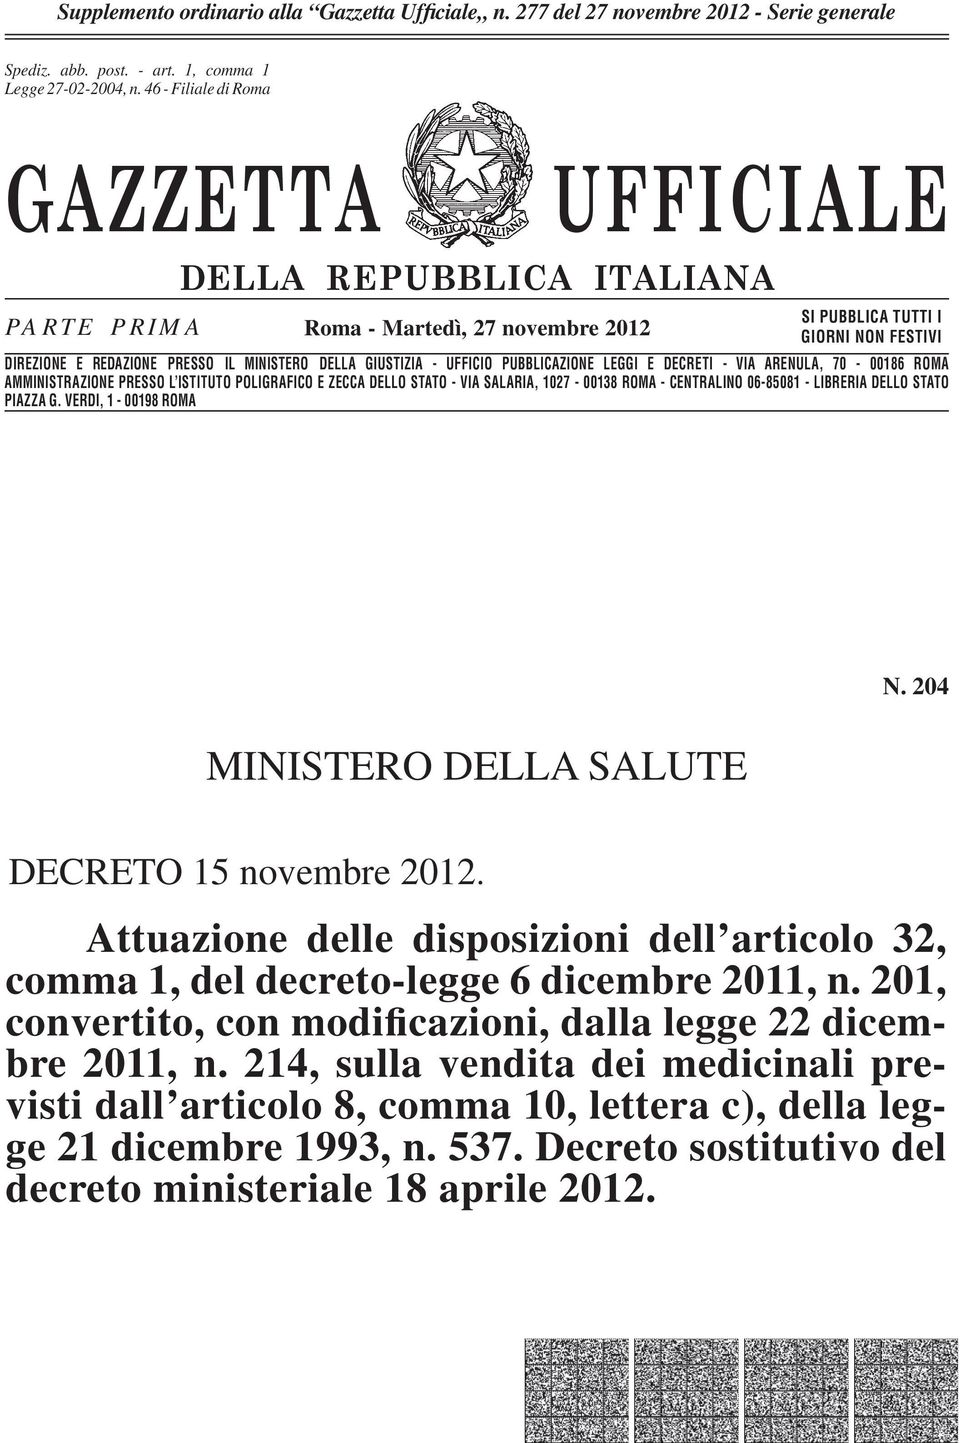 vembre 2012 - Serie generale Spediz. abb. post. 45% - art. - 1, art. comma 2, comma 1 20/b Legge 27-02-2004, 23-12-1996, n.